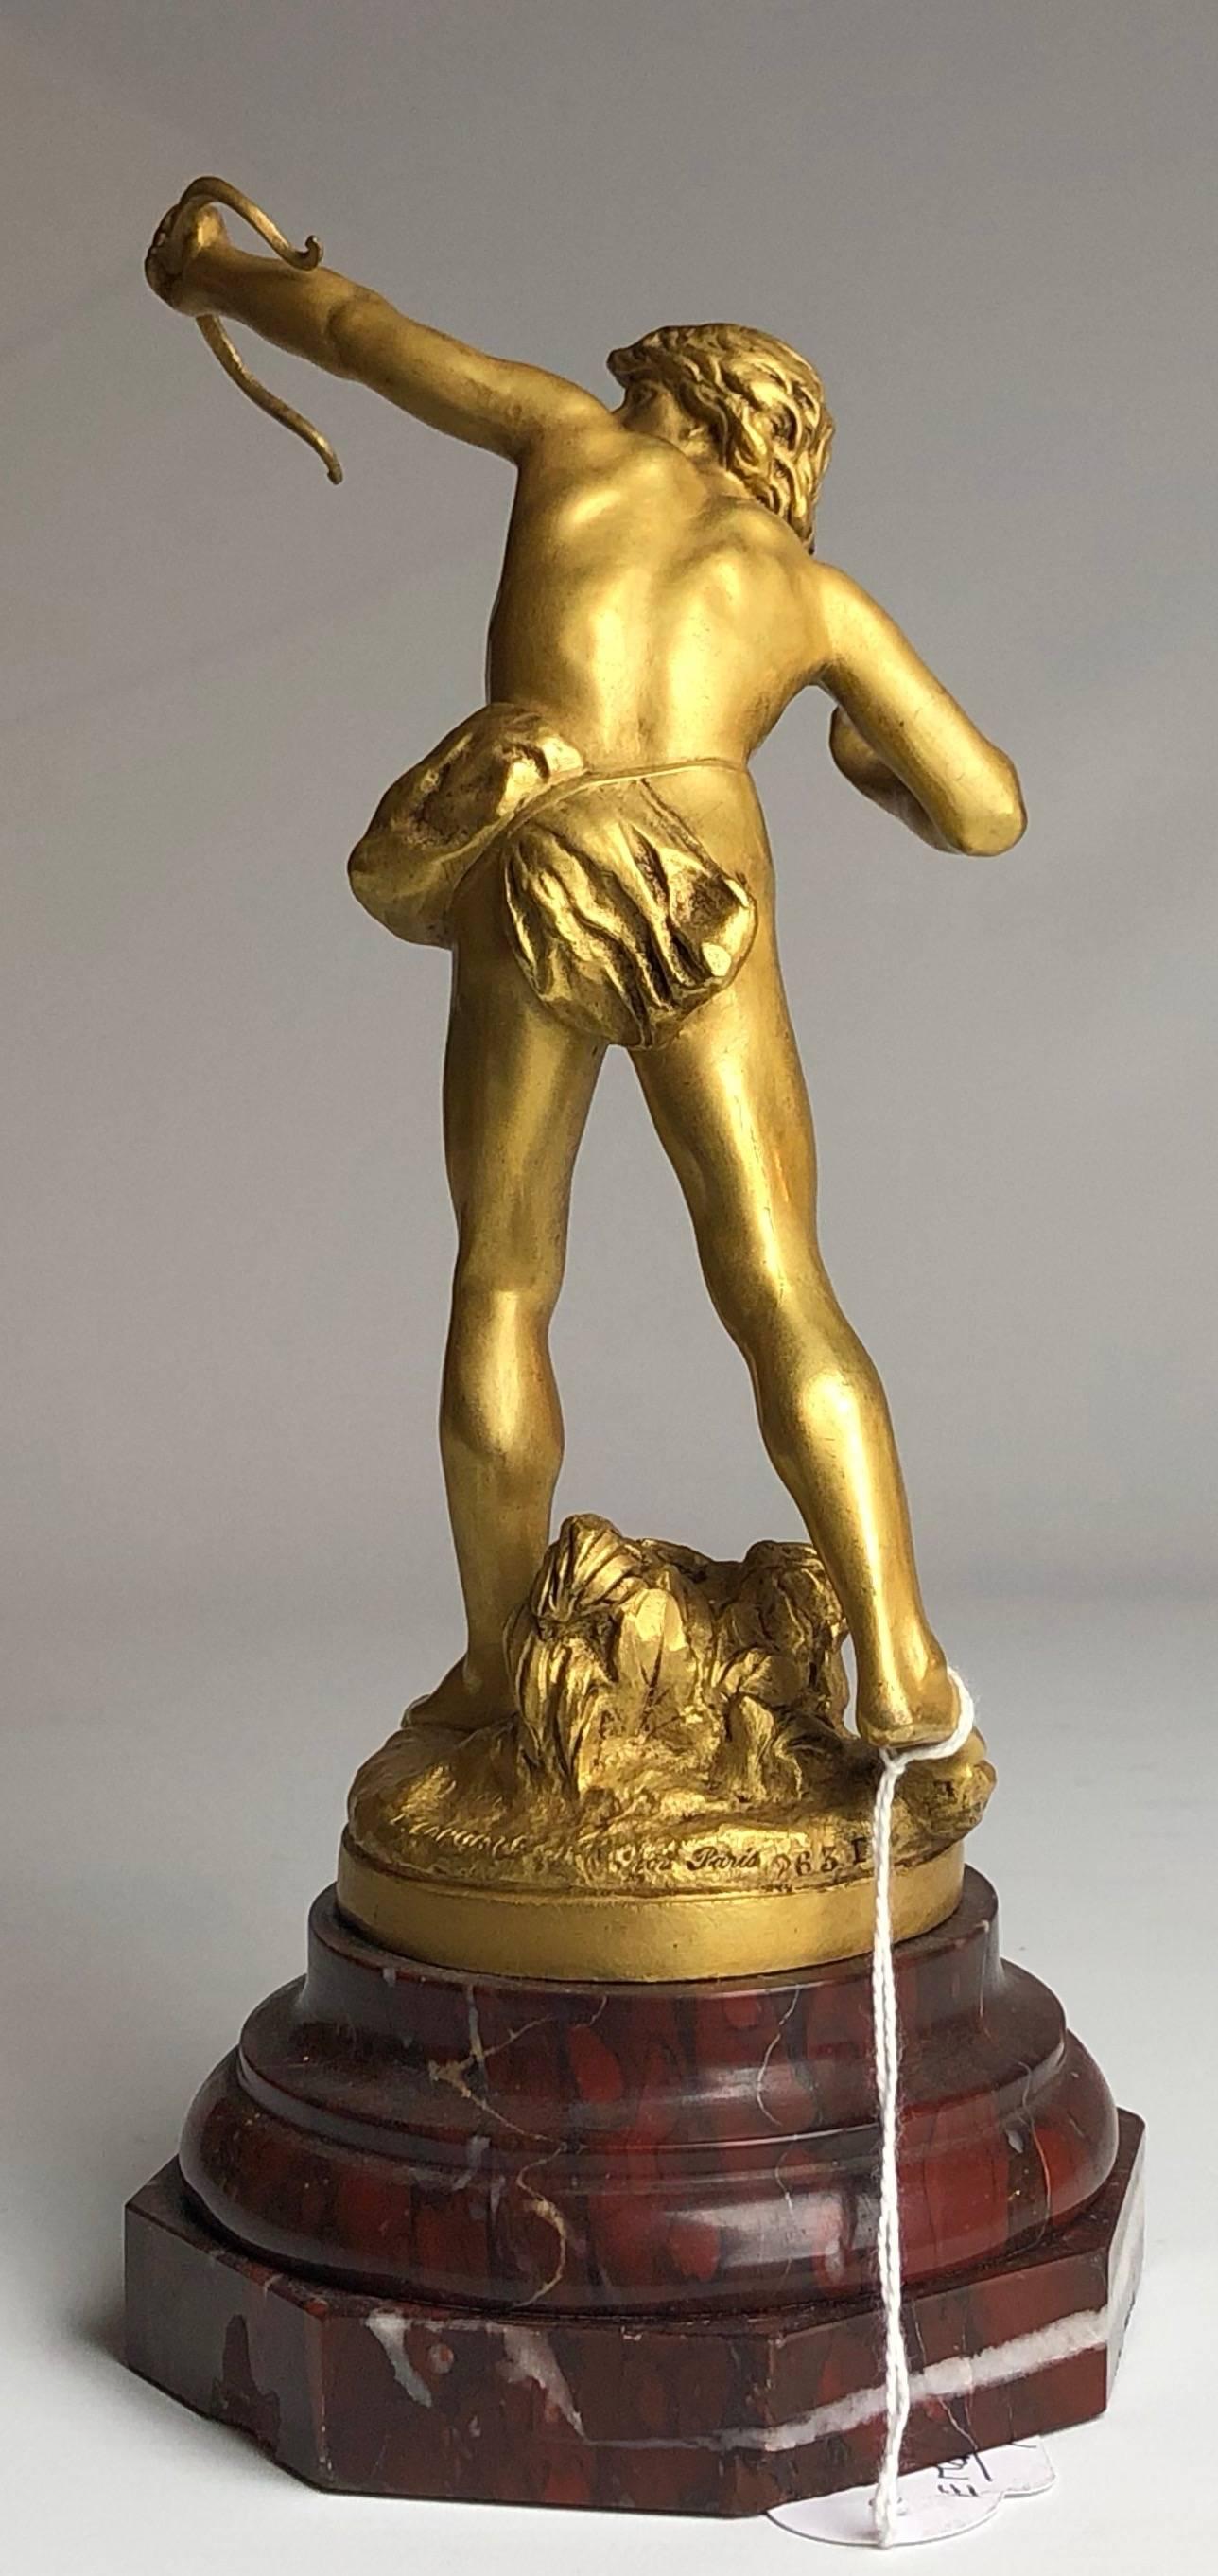 Grand Tour 19th Century Gilt Bronze Figure of Acteon, Signed E. Laporte, Paris, circa 1890